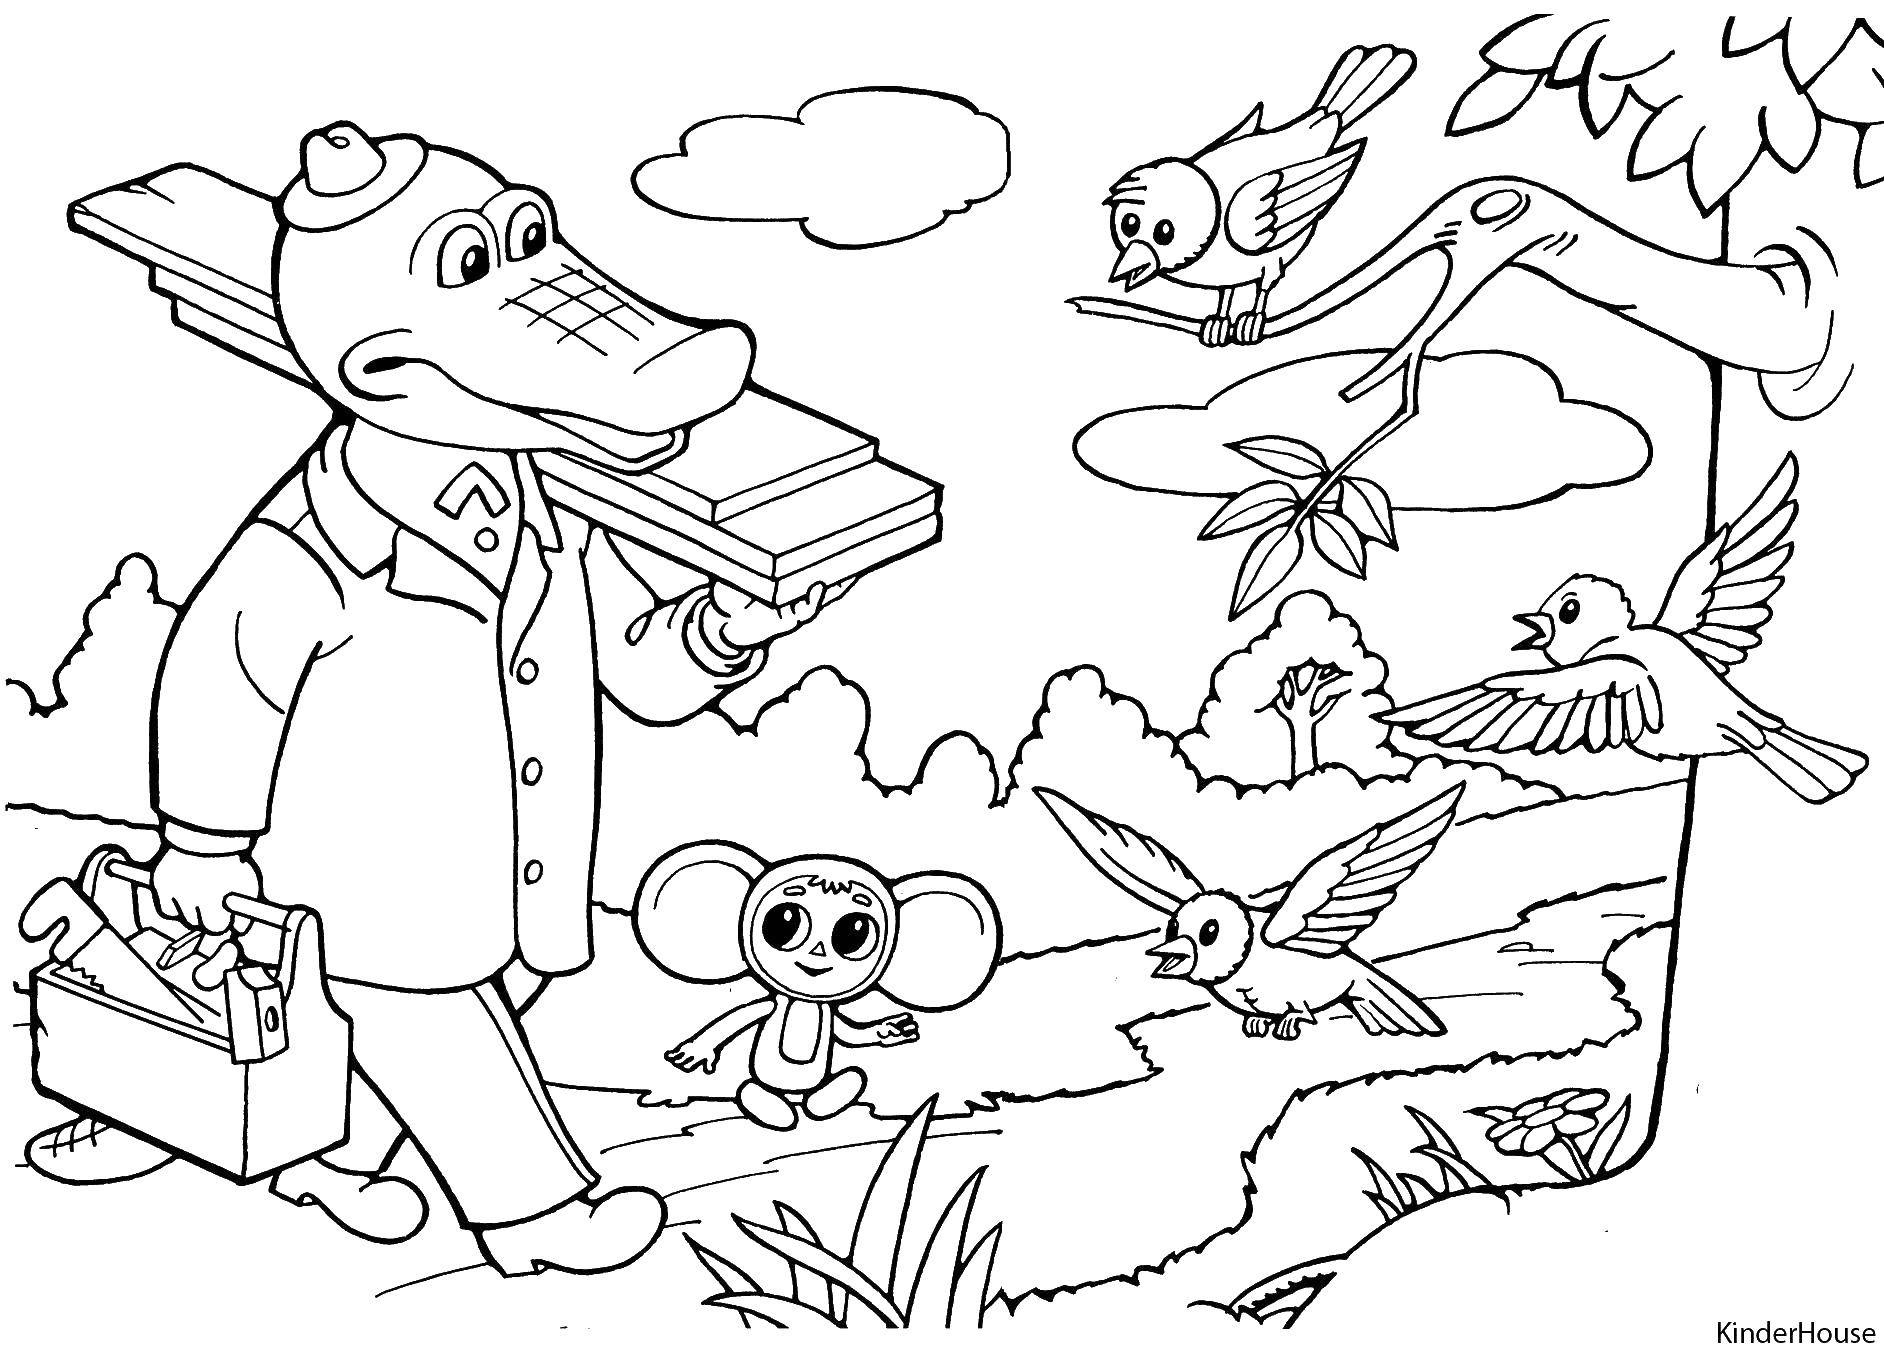 Coloring Crocodile Gena and Cheburashka builds. Category cartoons. Tags:  Gena, Cheburashka.